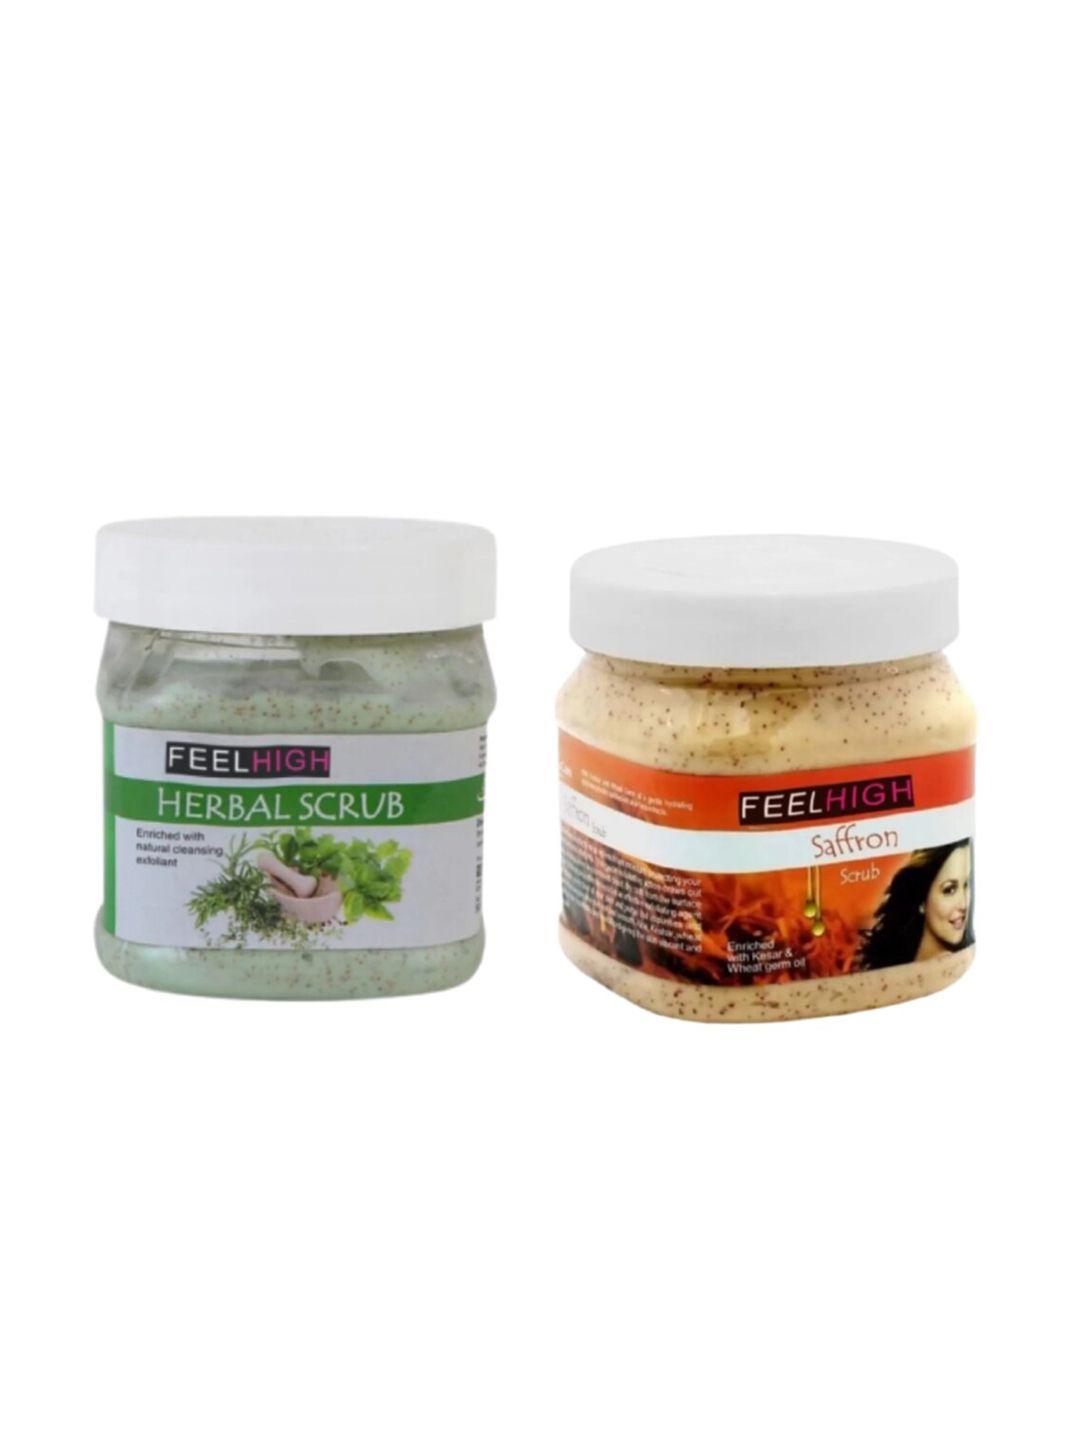 feelhigh set of 2 herbal & saffron face scrubs - 500 ml each